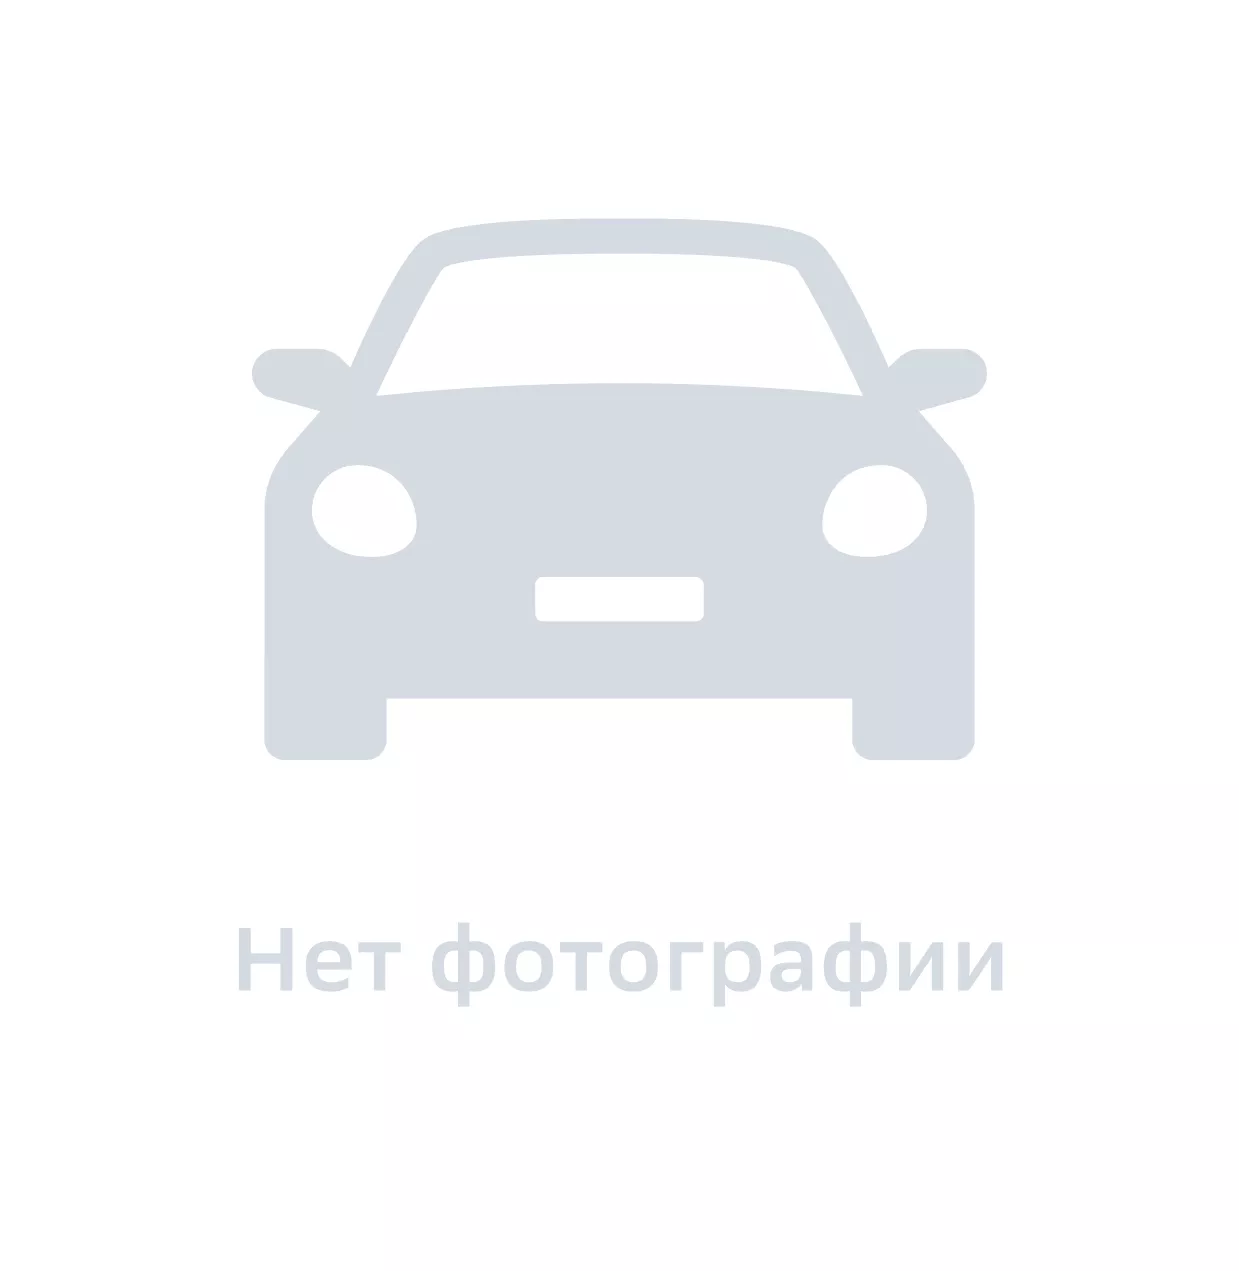 Шайба автомобильная, GM DAT, 94525263, цена за 1 шт.